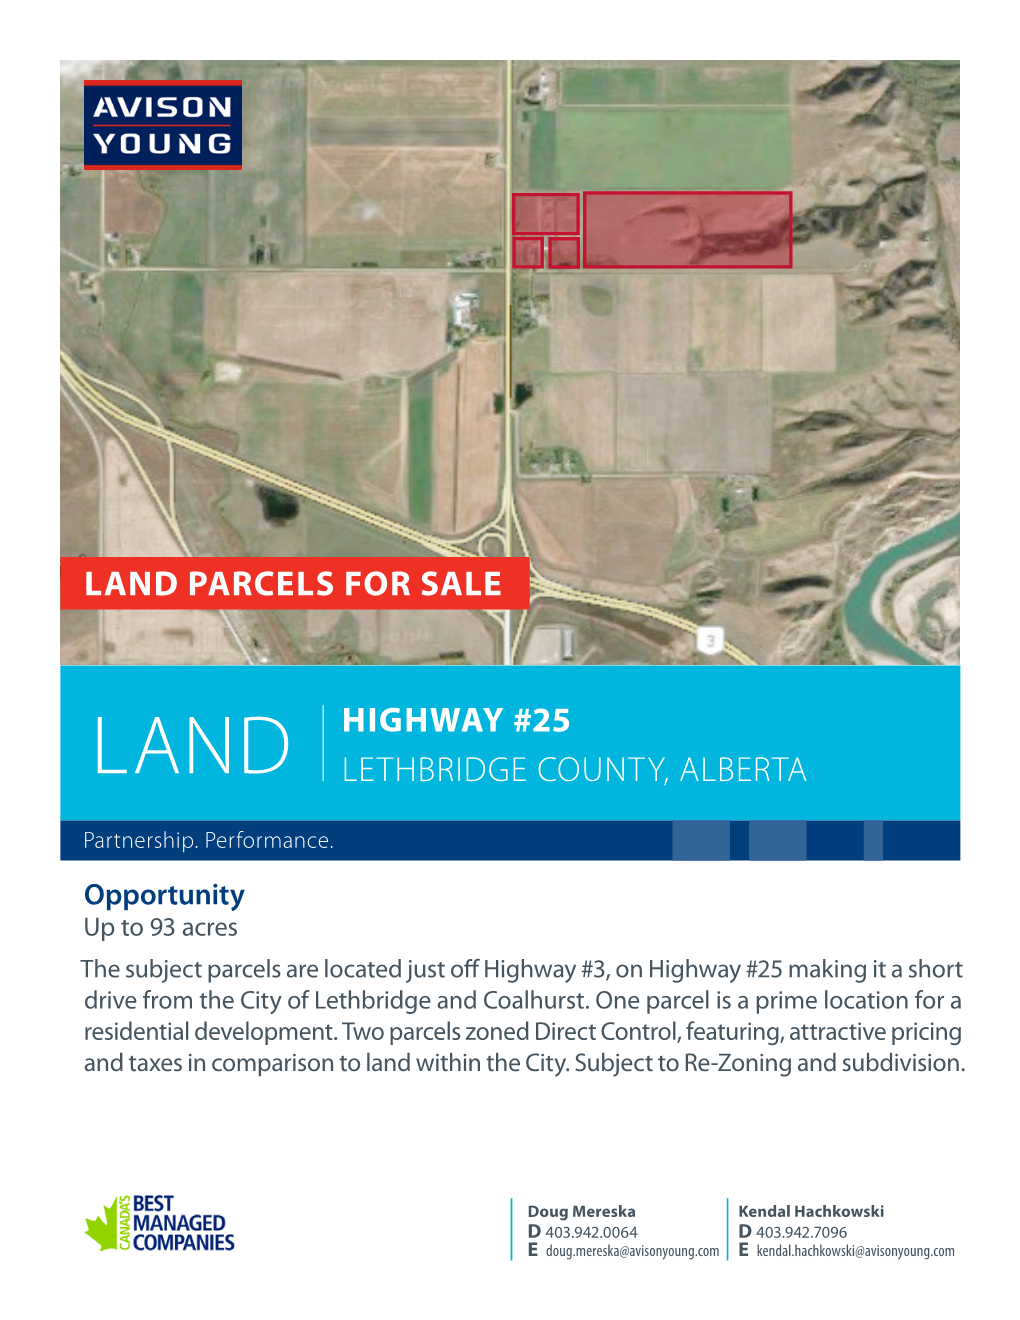 Highway #25 Lethbridge County, Alberta Land